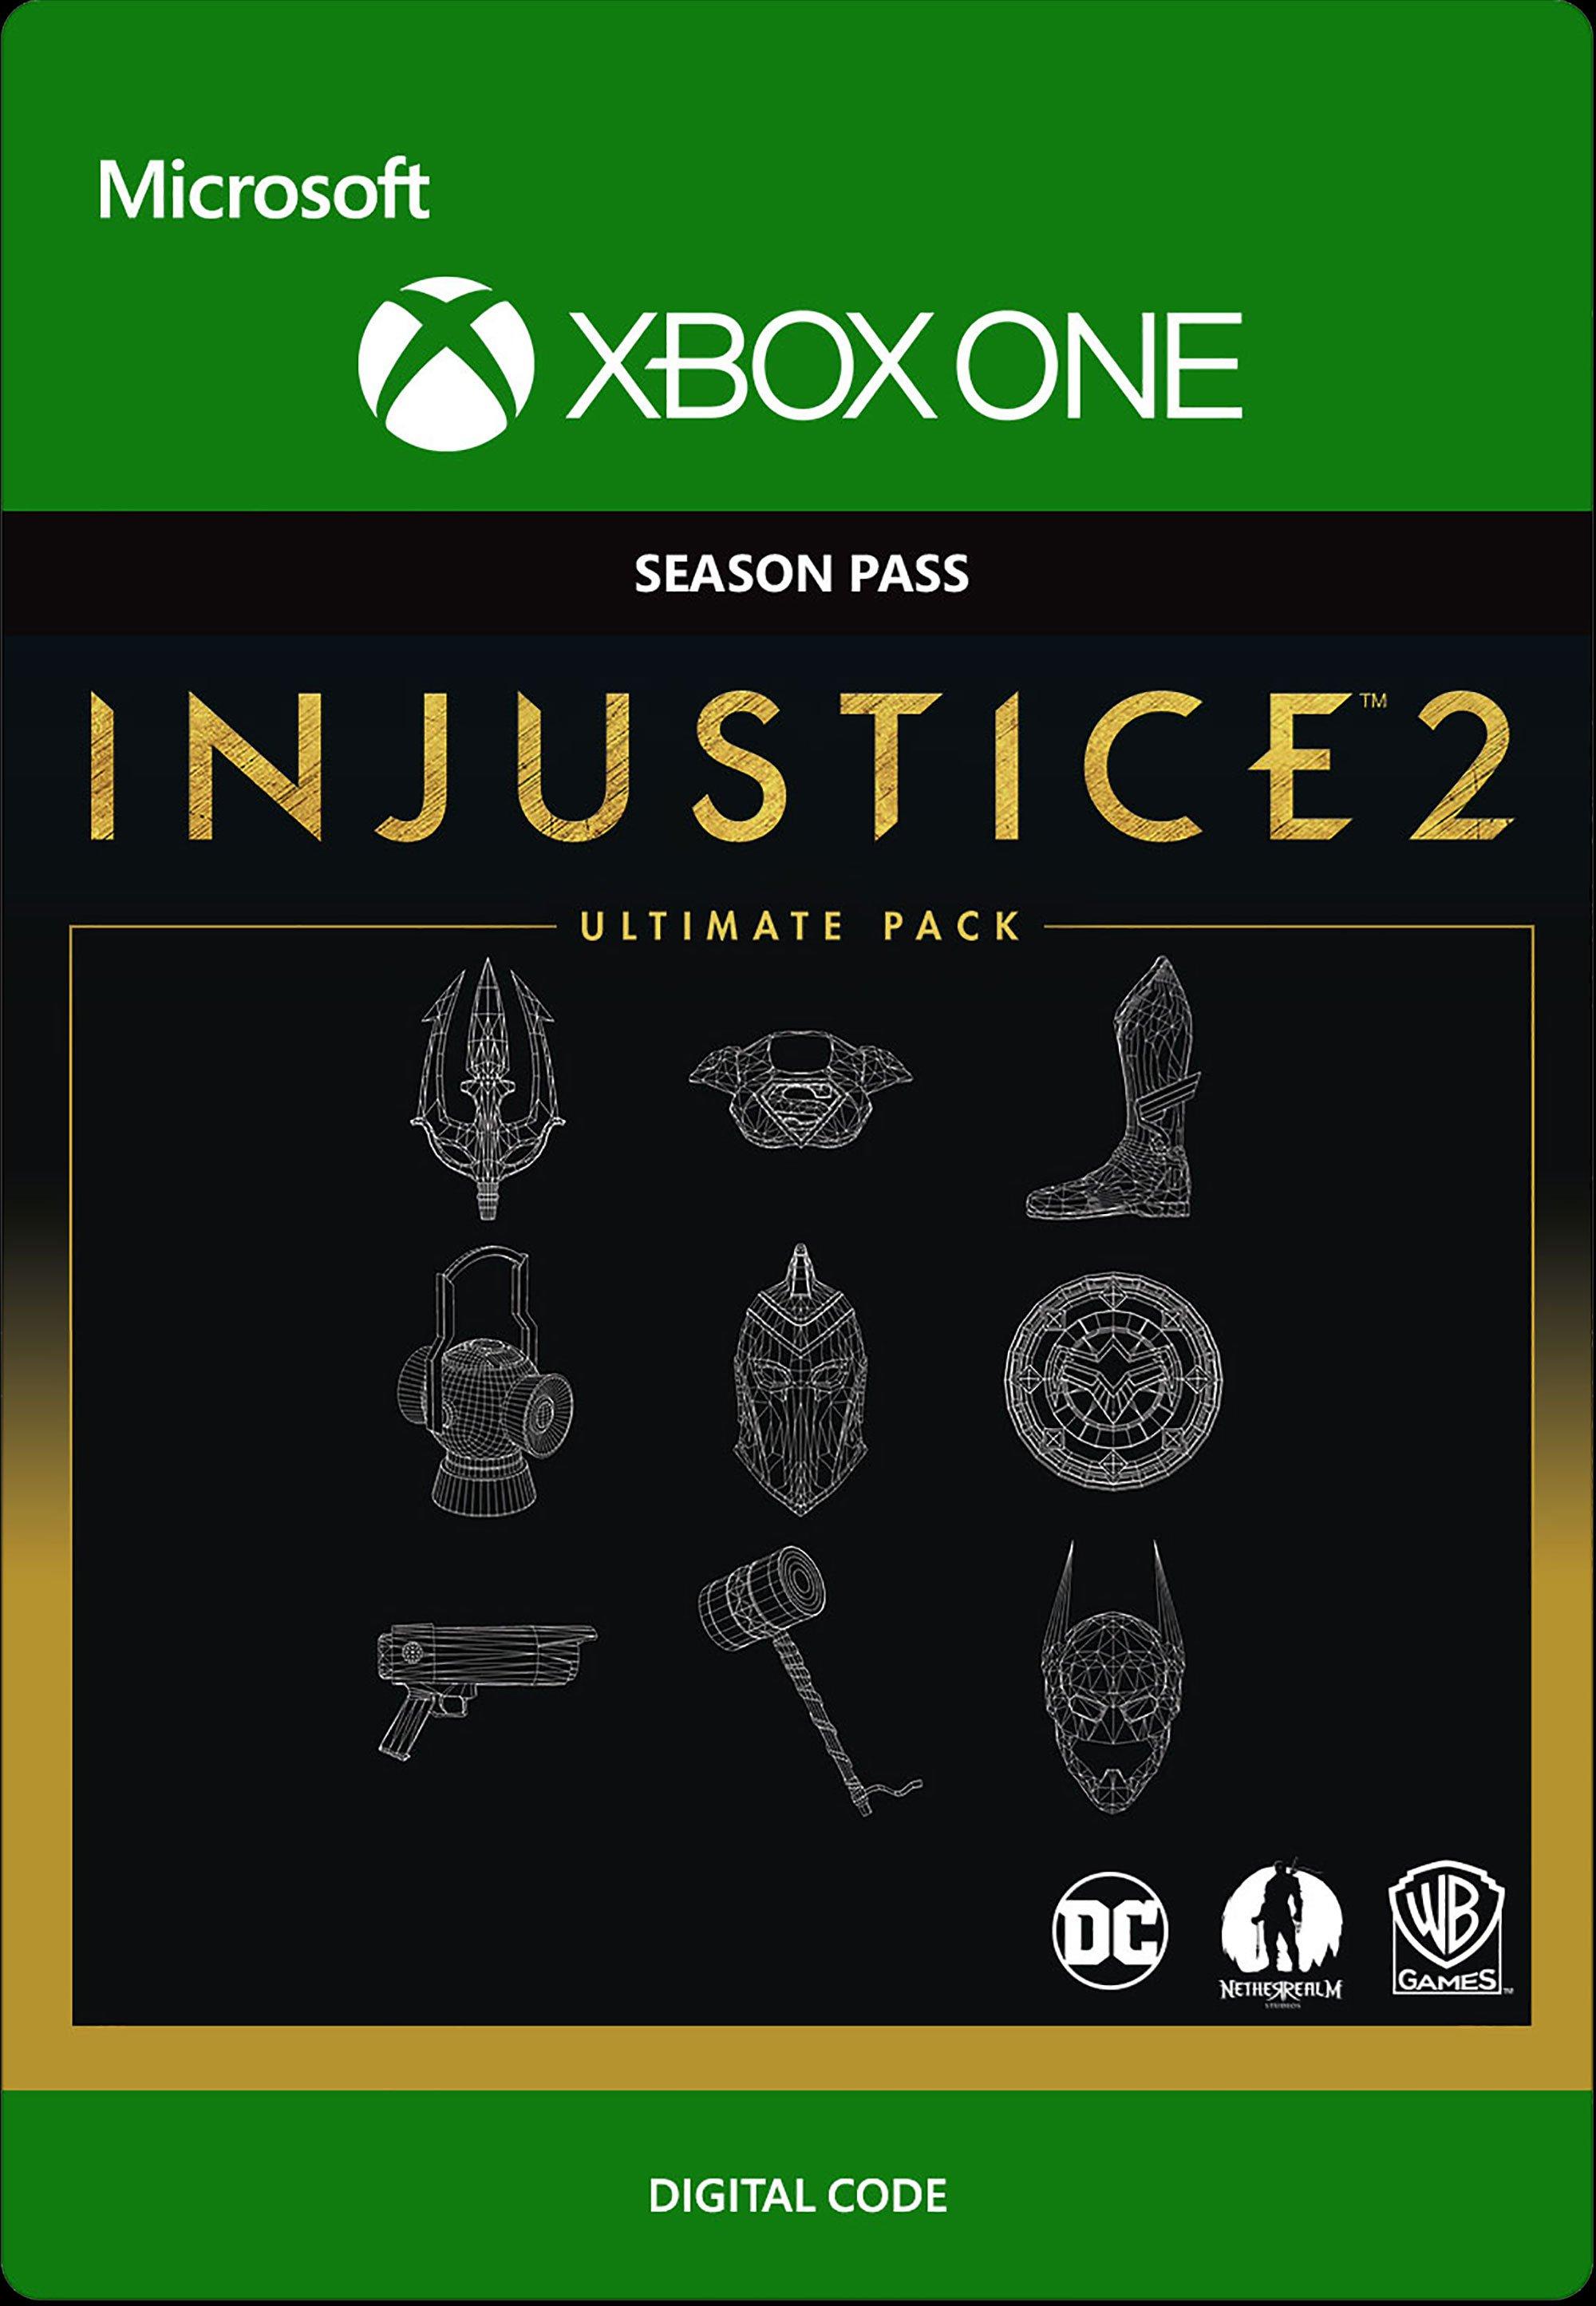 Injustice 2 Ultimate Pack DLC